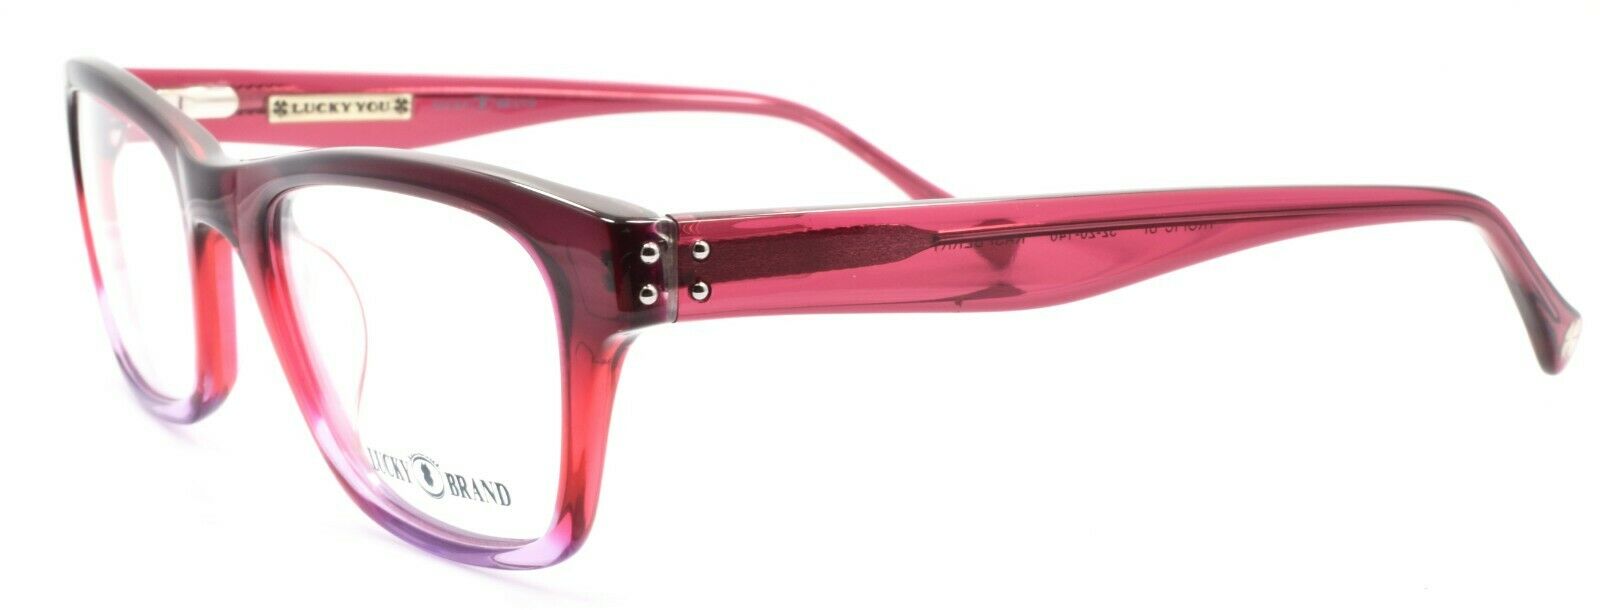 1-LUCKY BRAND Tropic UF Women's Eyeglasses Frames 52-20-140 Raspberry + CASE-751286248227-IKSpecs